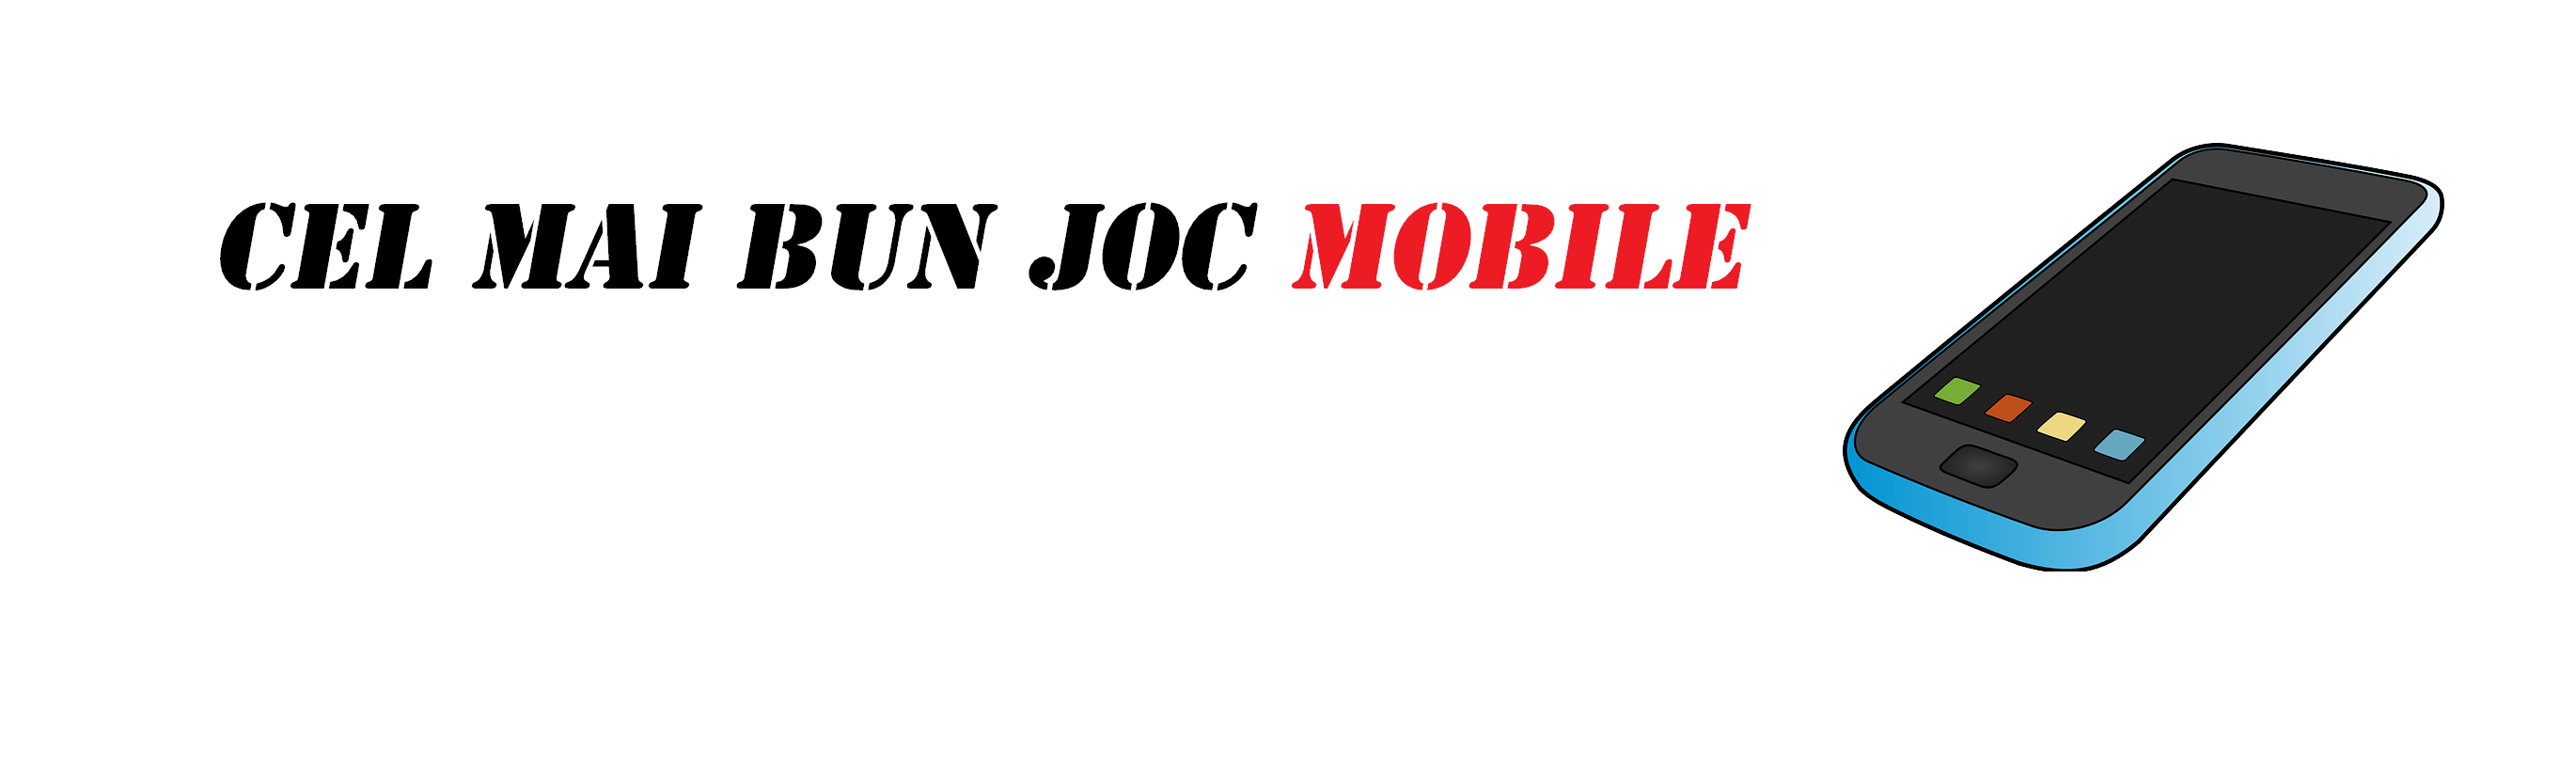 mobile-157065_640